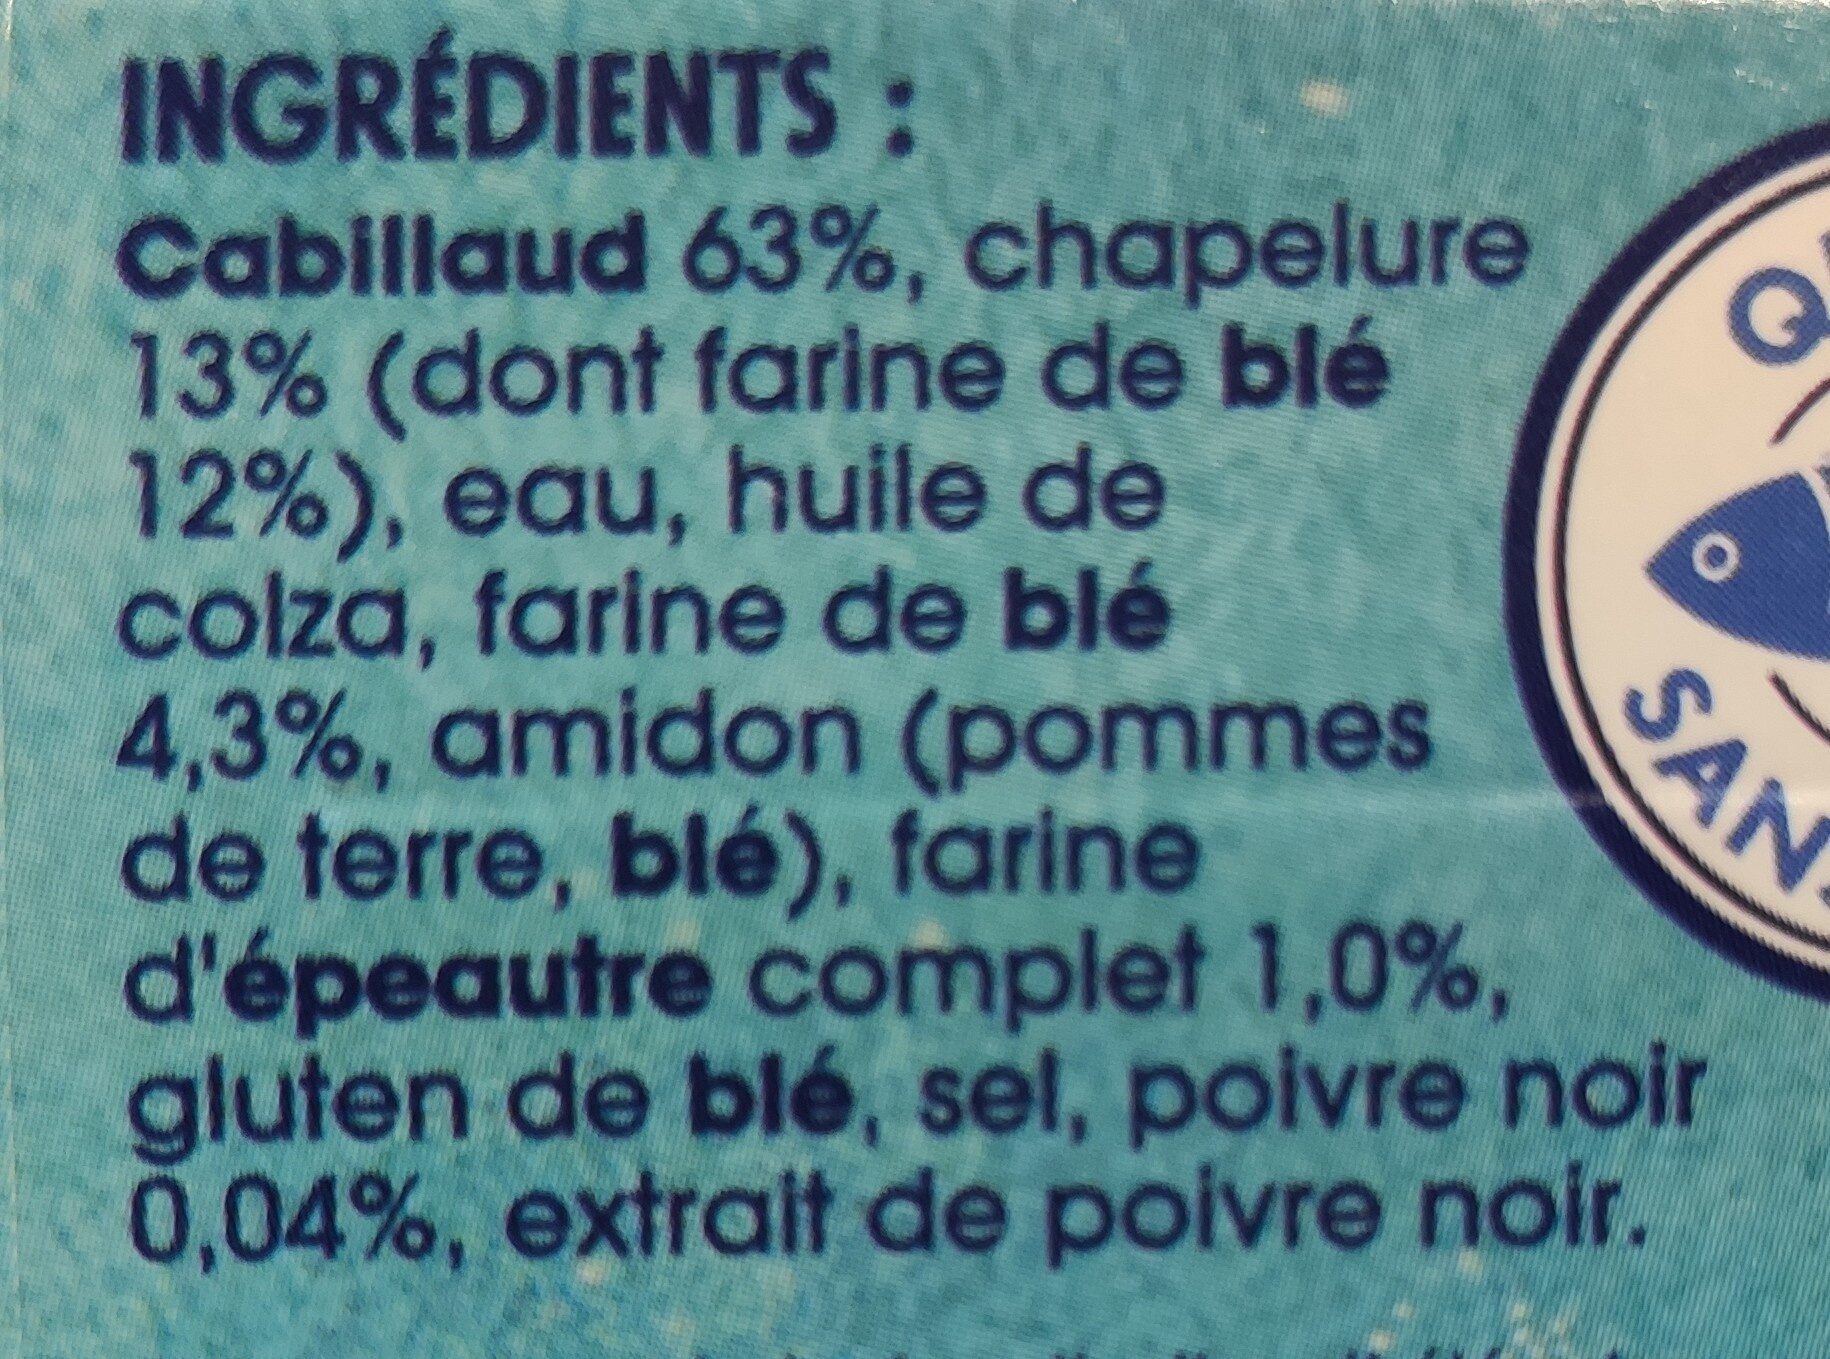 Tranches panées de Cabillaud MSC - Ingrediënten - fr